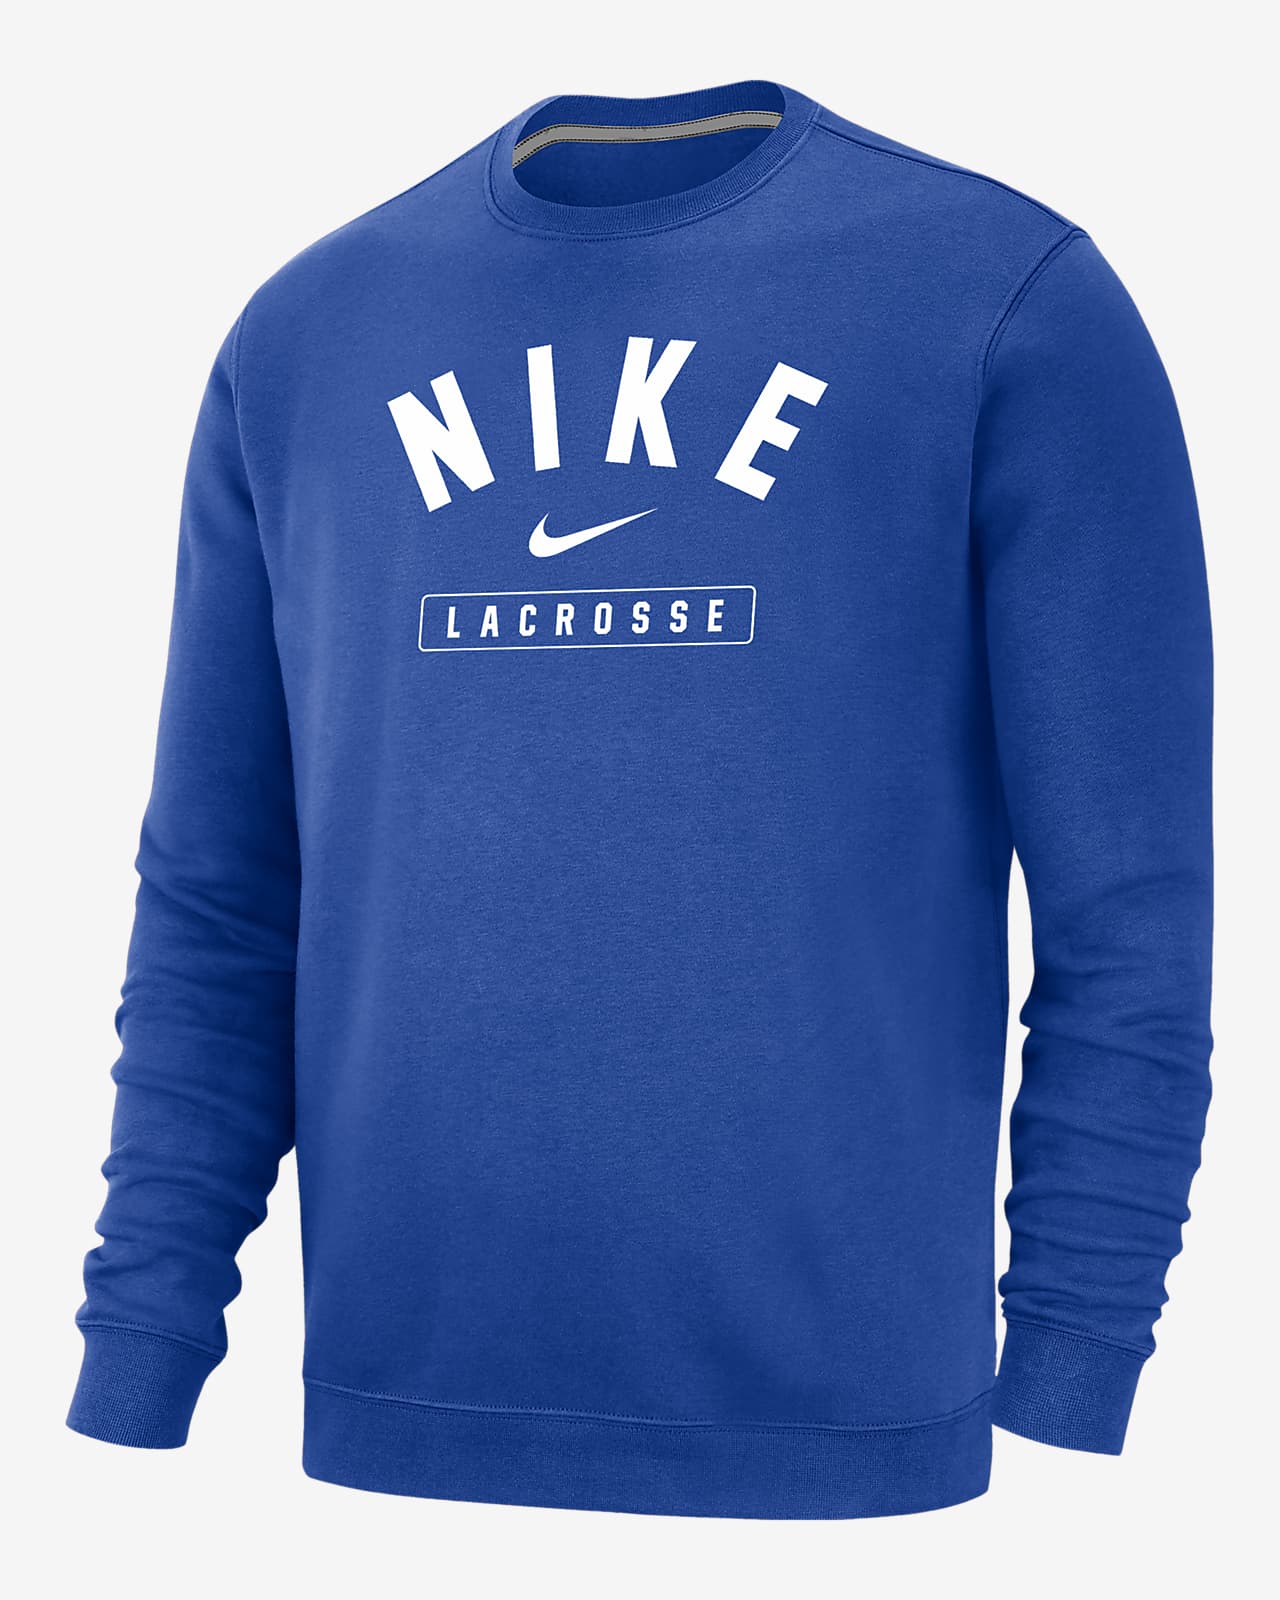 Nike Lacrosse Men's Crew-Neck Sweatshirt